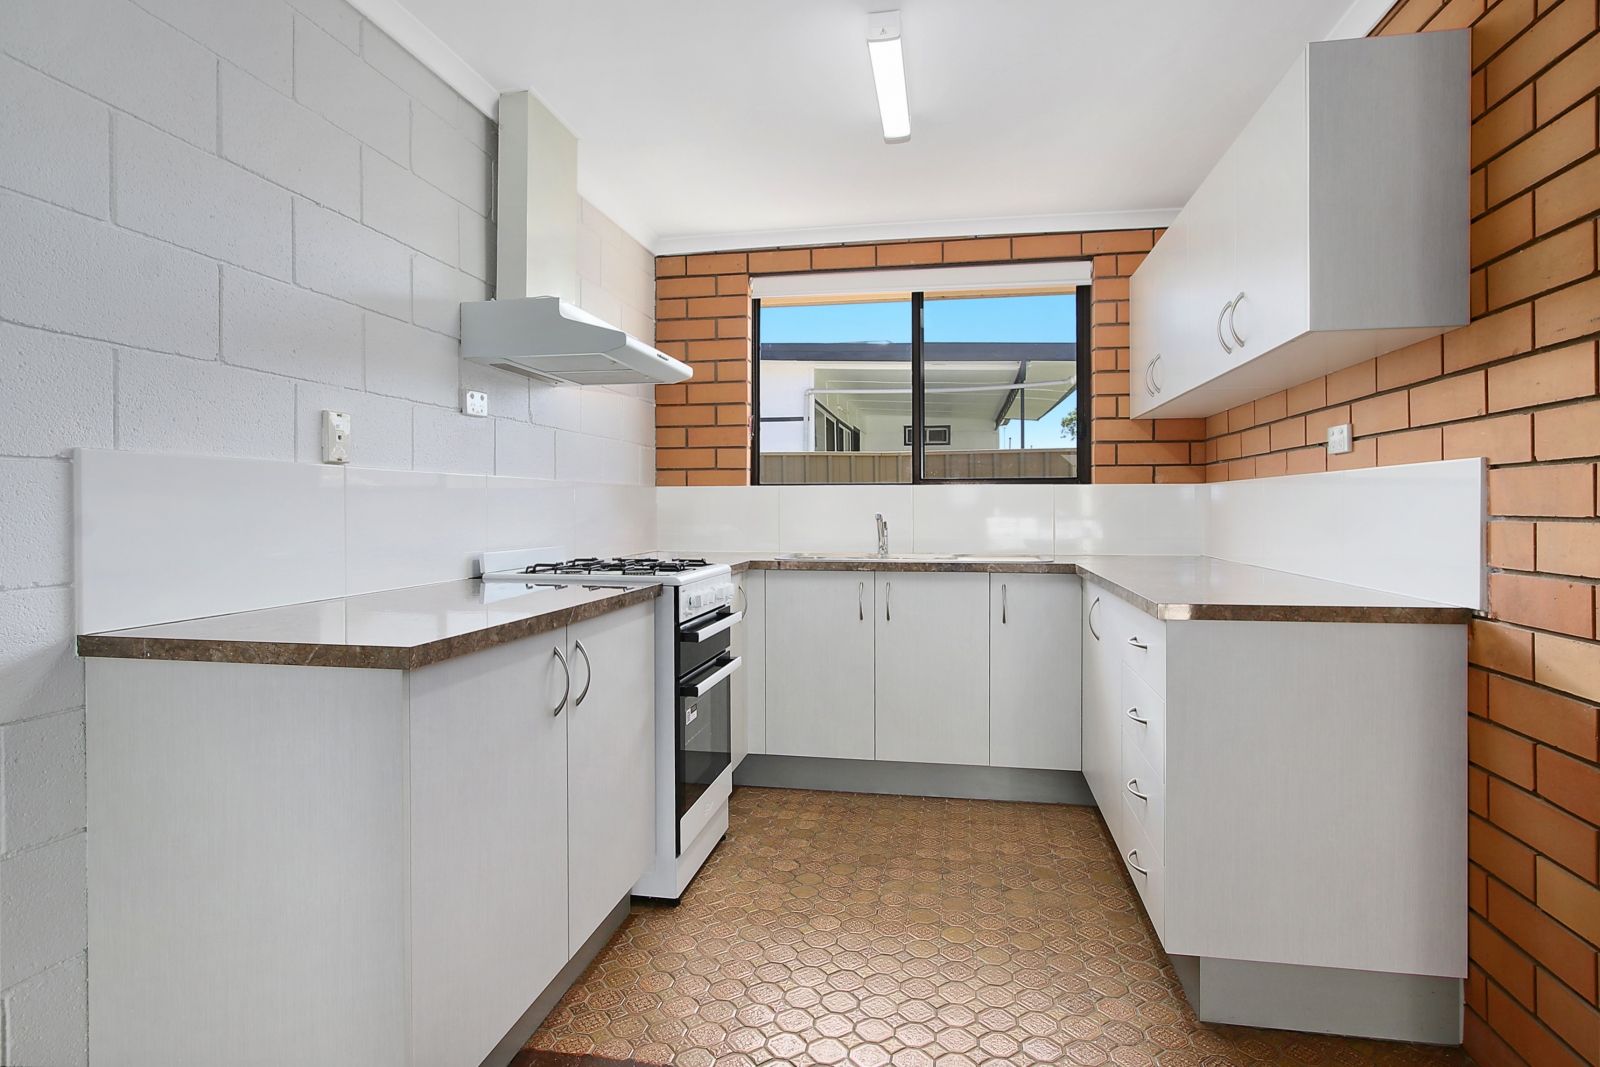 2 bedrooms House in 4/378 Urana Road LAVINGTON NSW, 2641